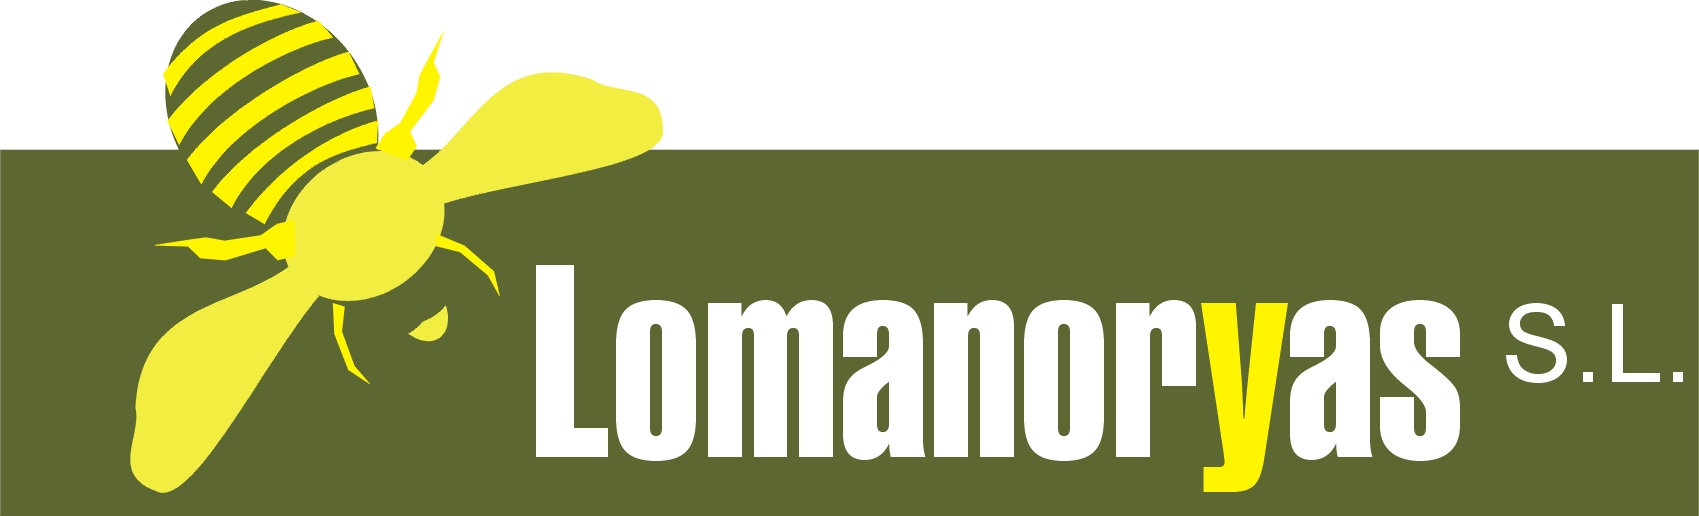 Lomanoryas